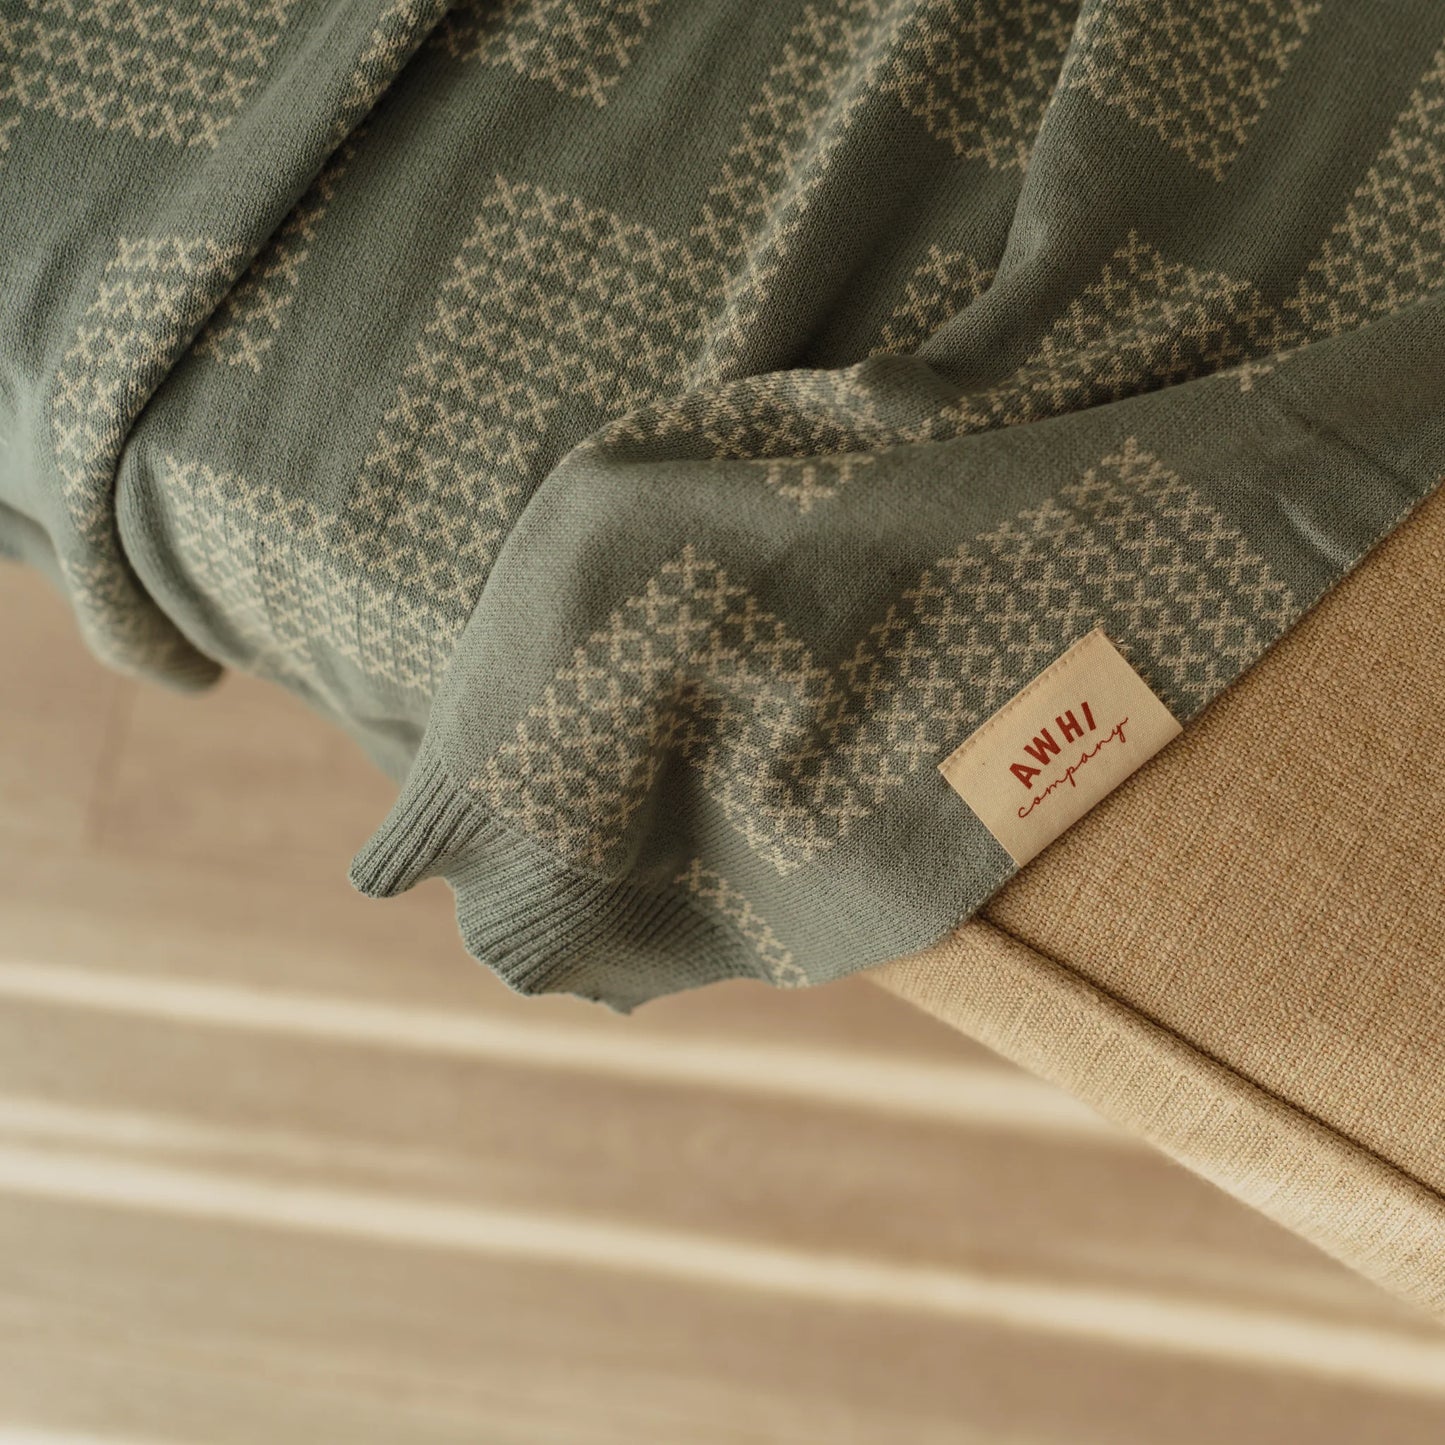 Pēpi Blanket - Knitted - Poutama - Awhi Company